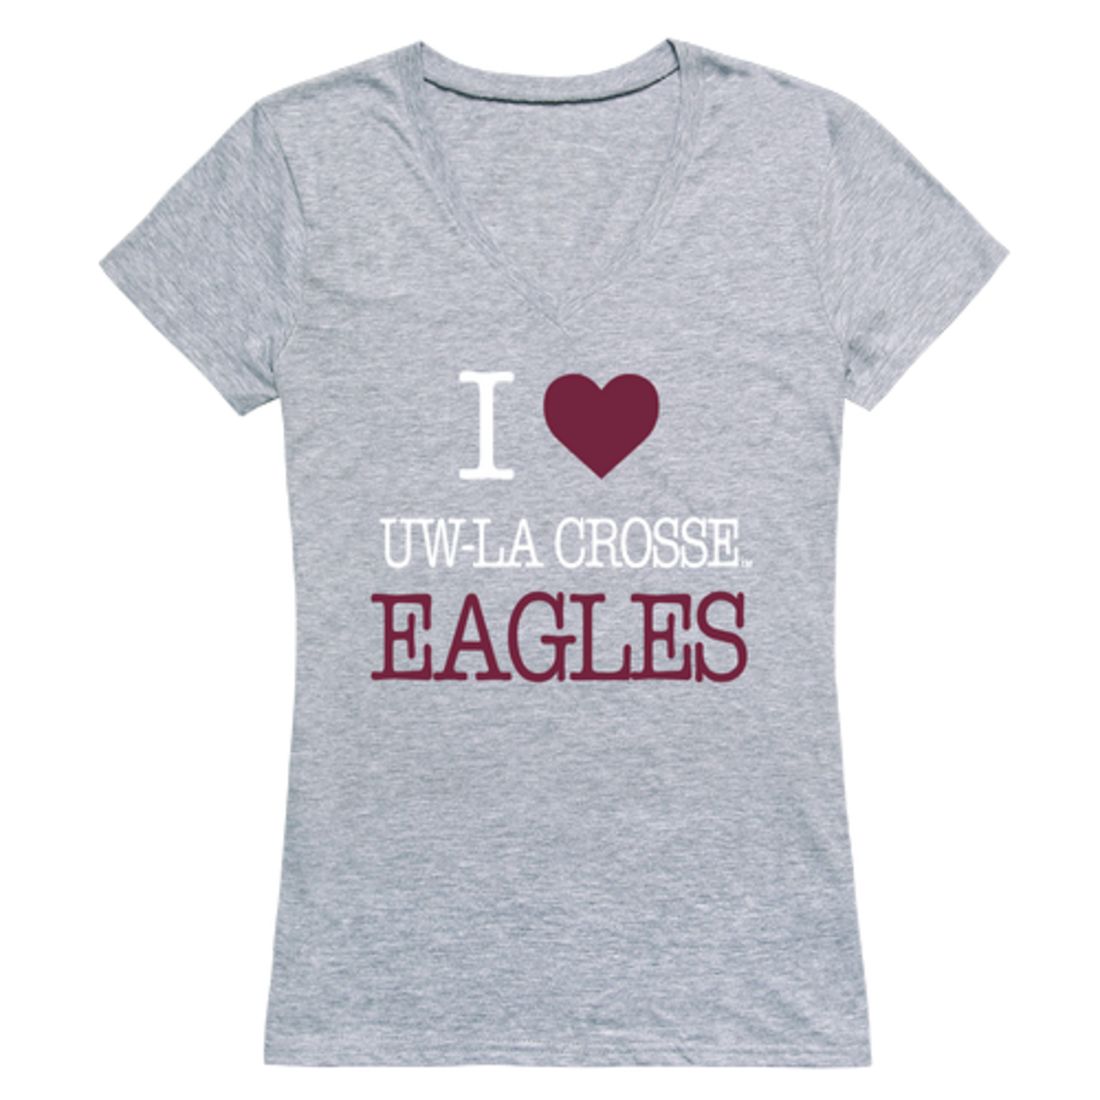 I Love University of Wisconsin-La Crosse Eagles Womens T-Shirt Tee